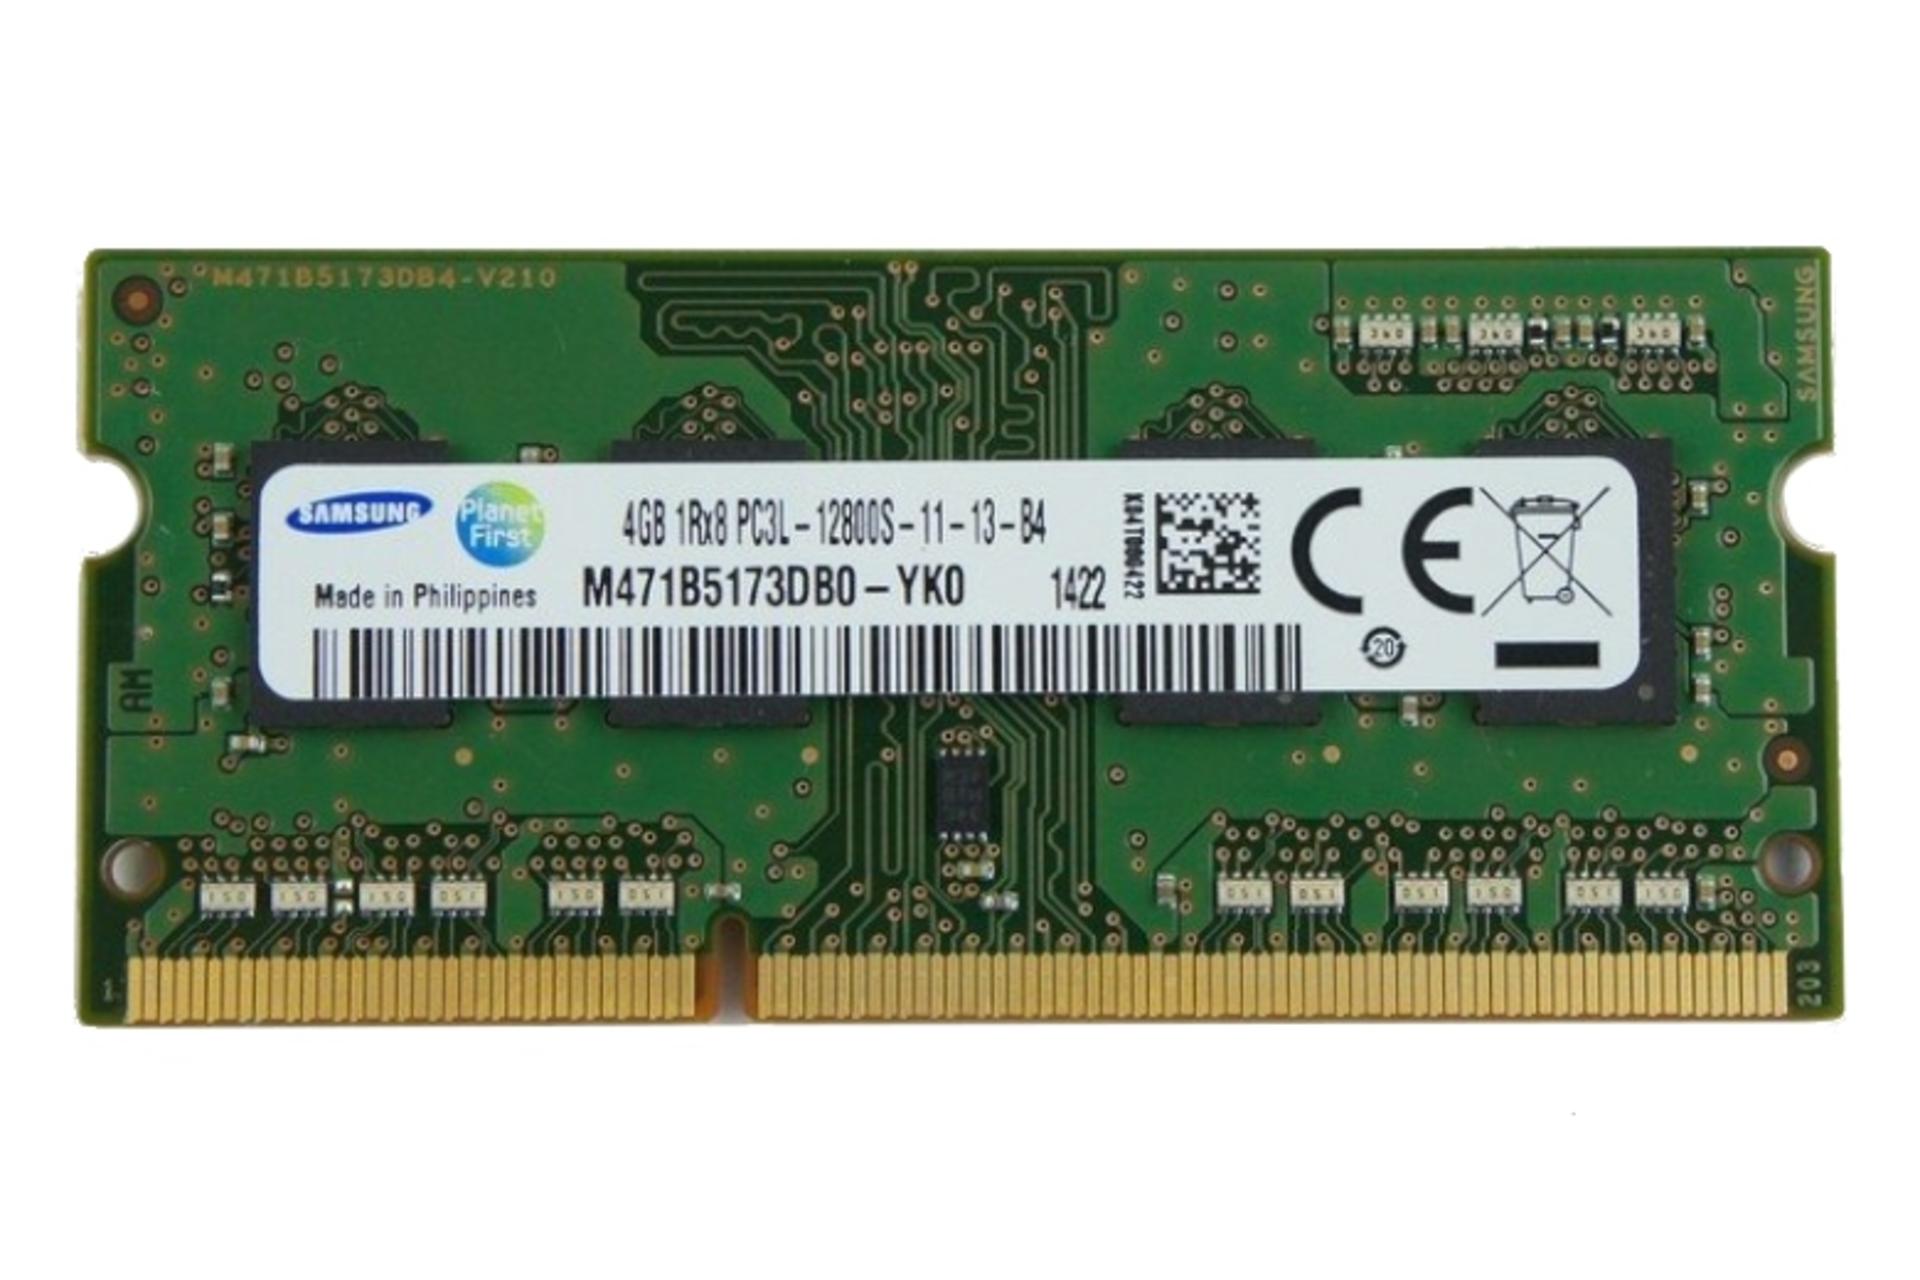 حافظه رم سامسونگ M471B5173DB0-YK0 ظرفیت 4 گیگابایت Samsung M471B5173DB0-YK0 4GB DDR3L-1600 CL11